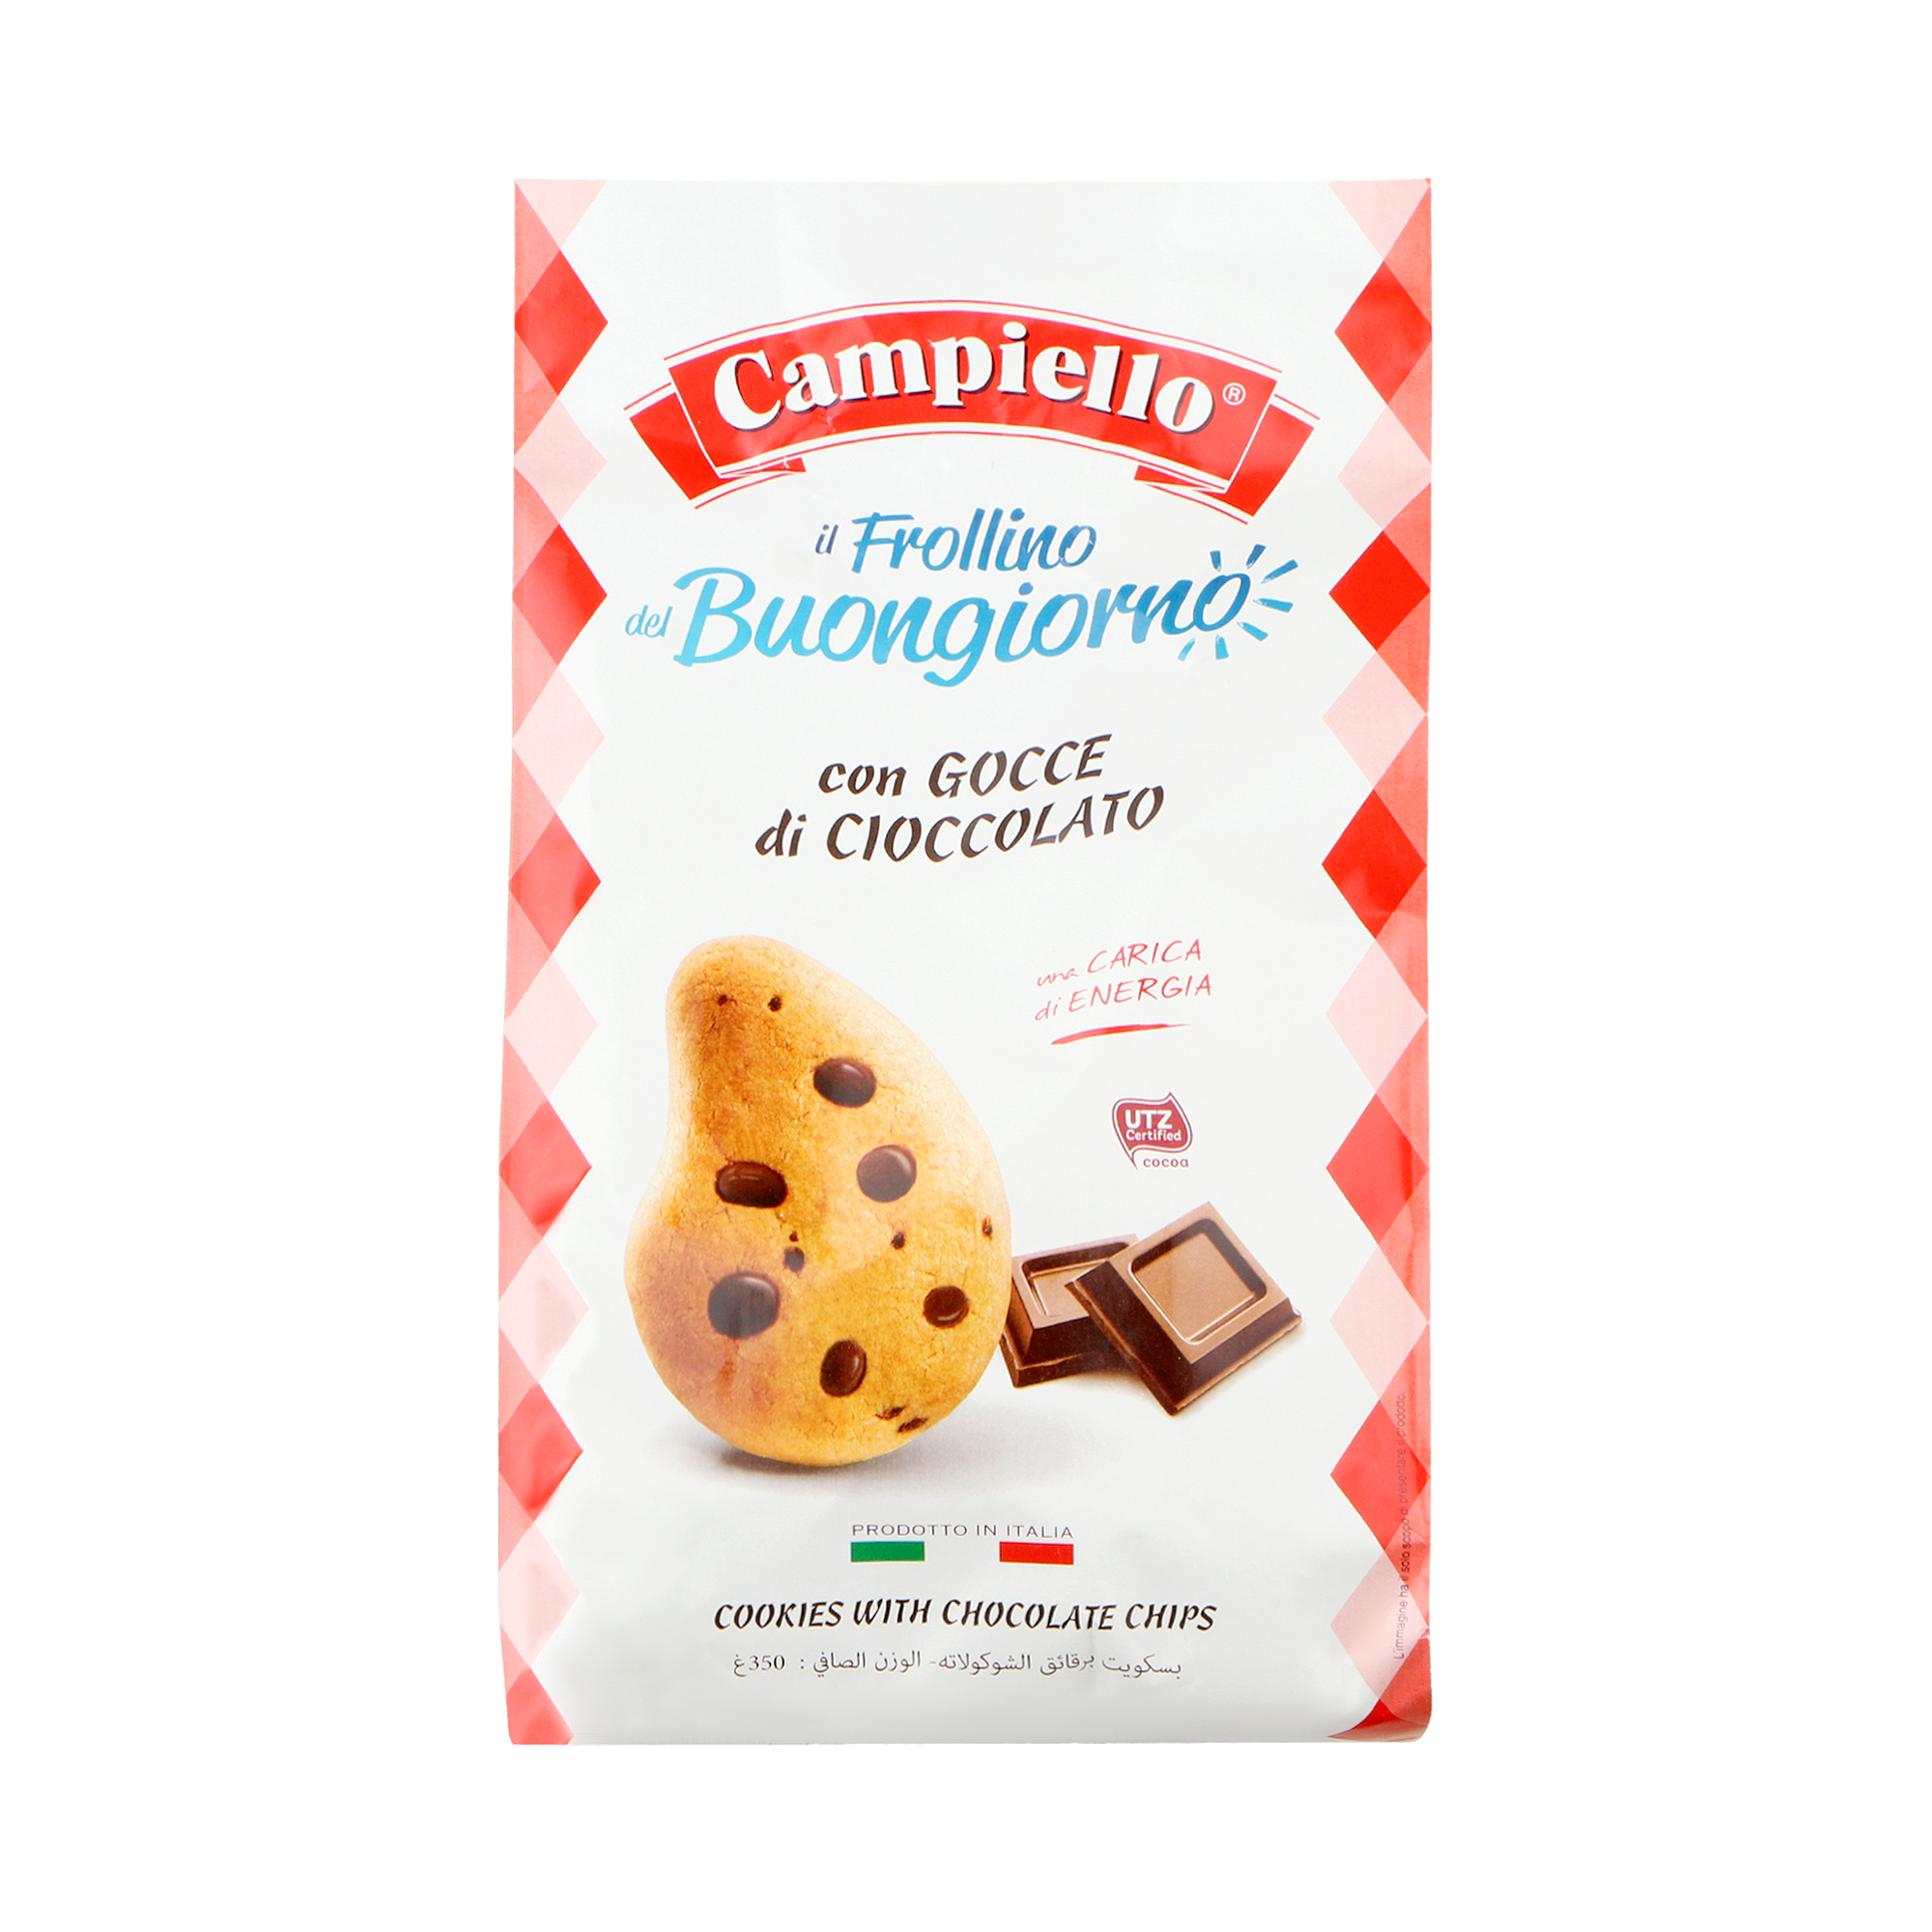 Печенье Campiello il Frollino del Buongiorno с шоколадом 350 г